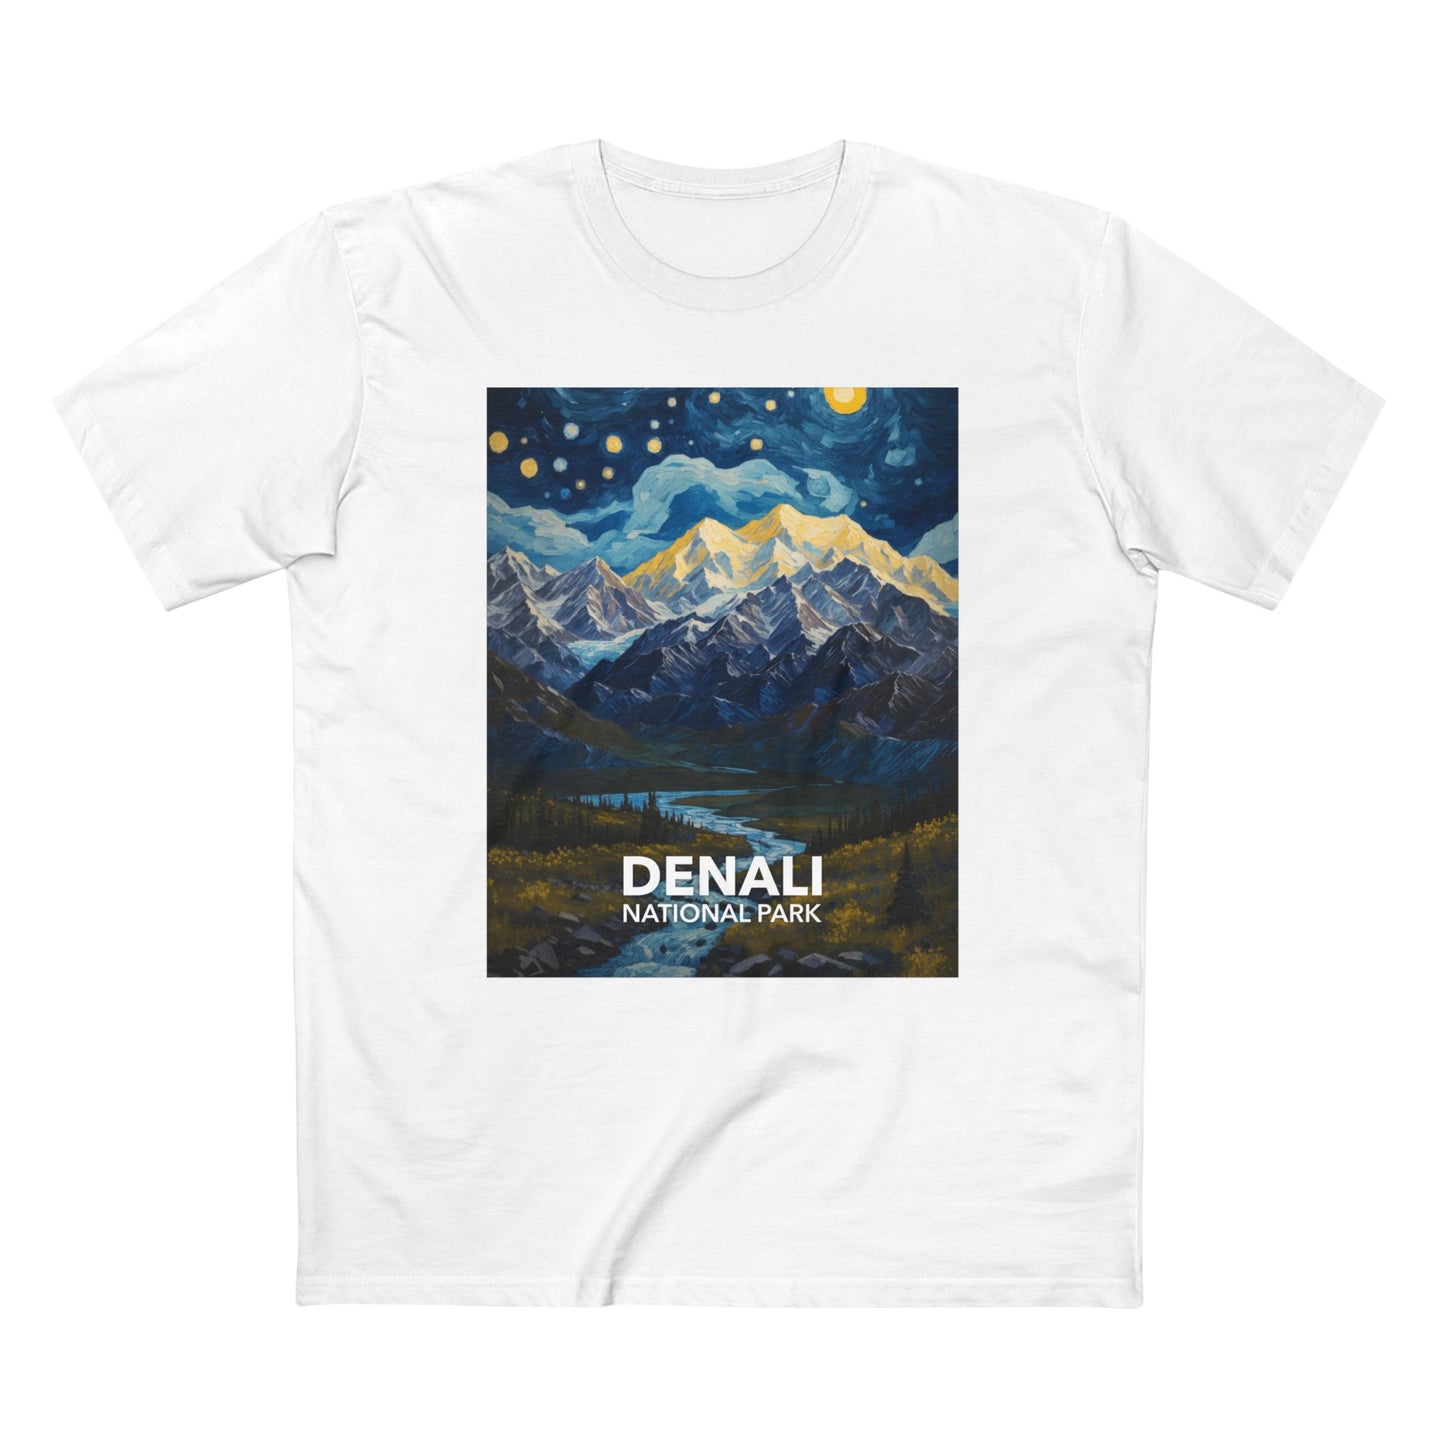 Denali National Park T-Shirt - The Starry Night